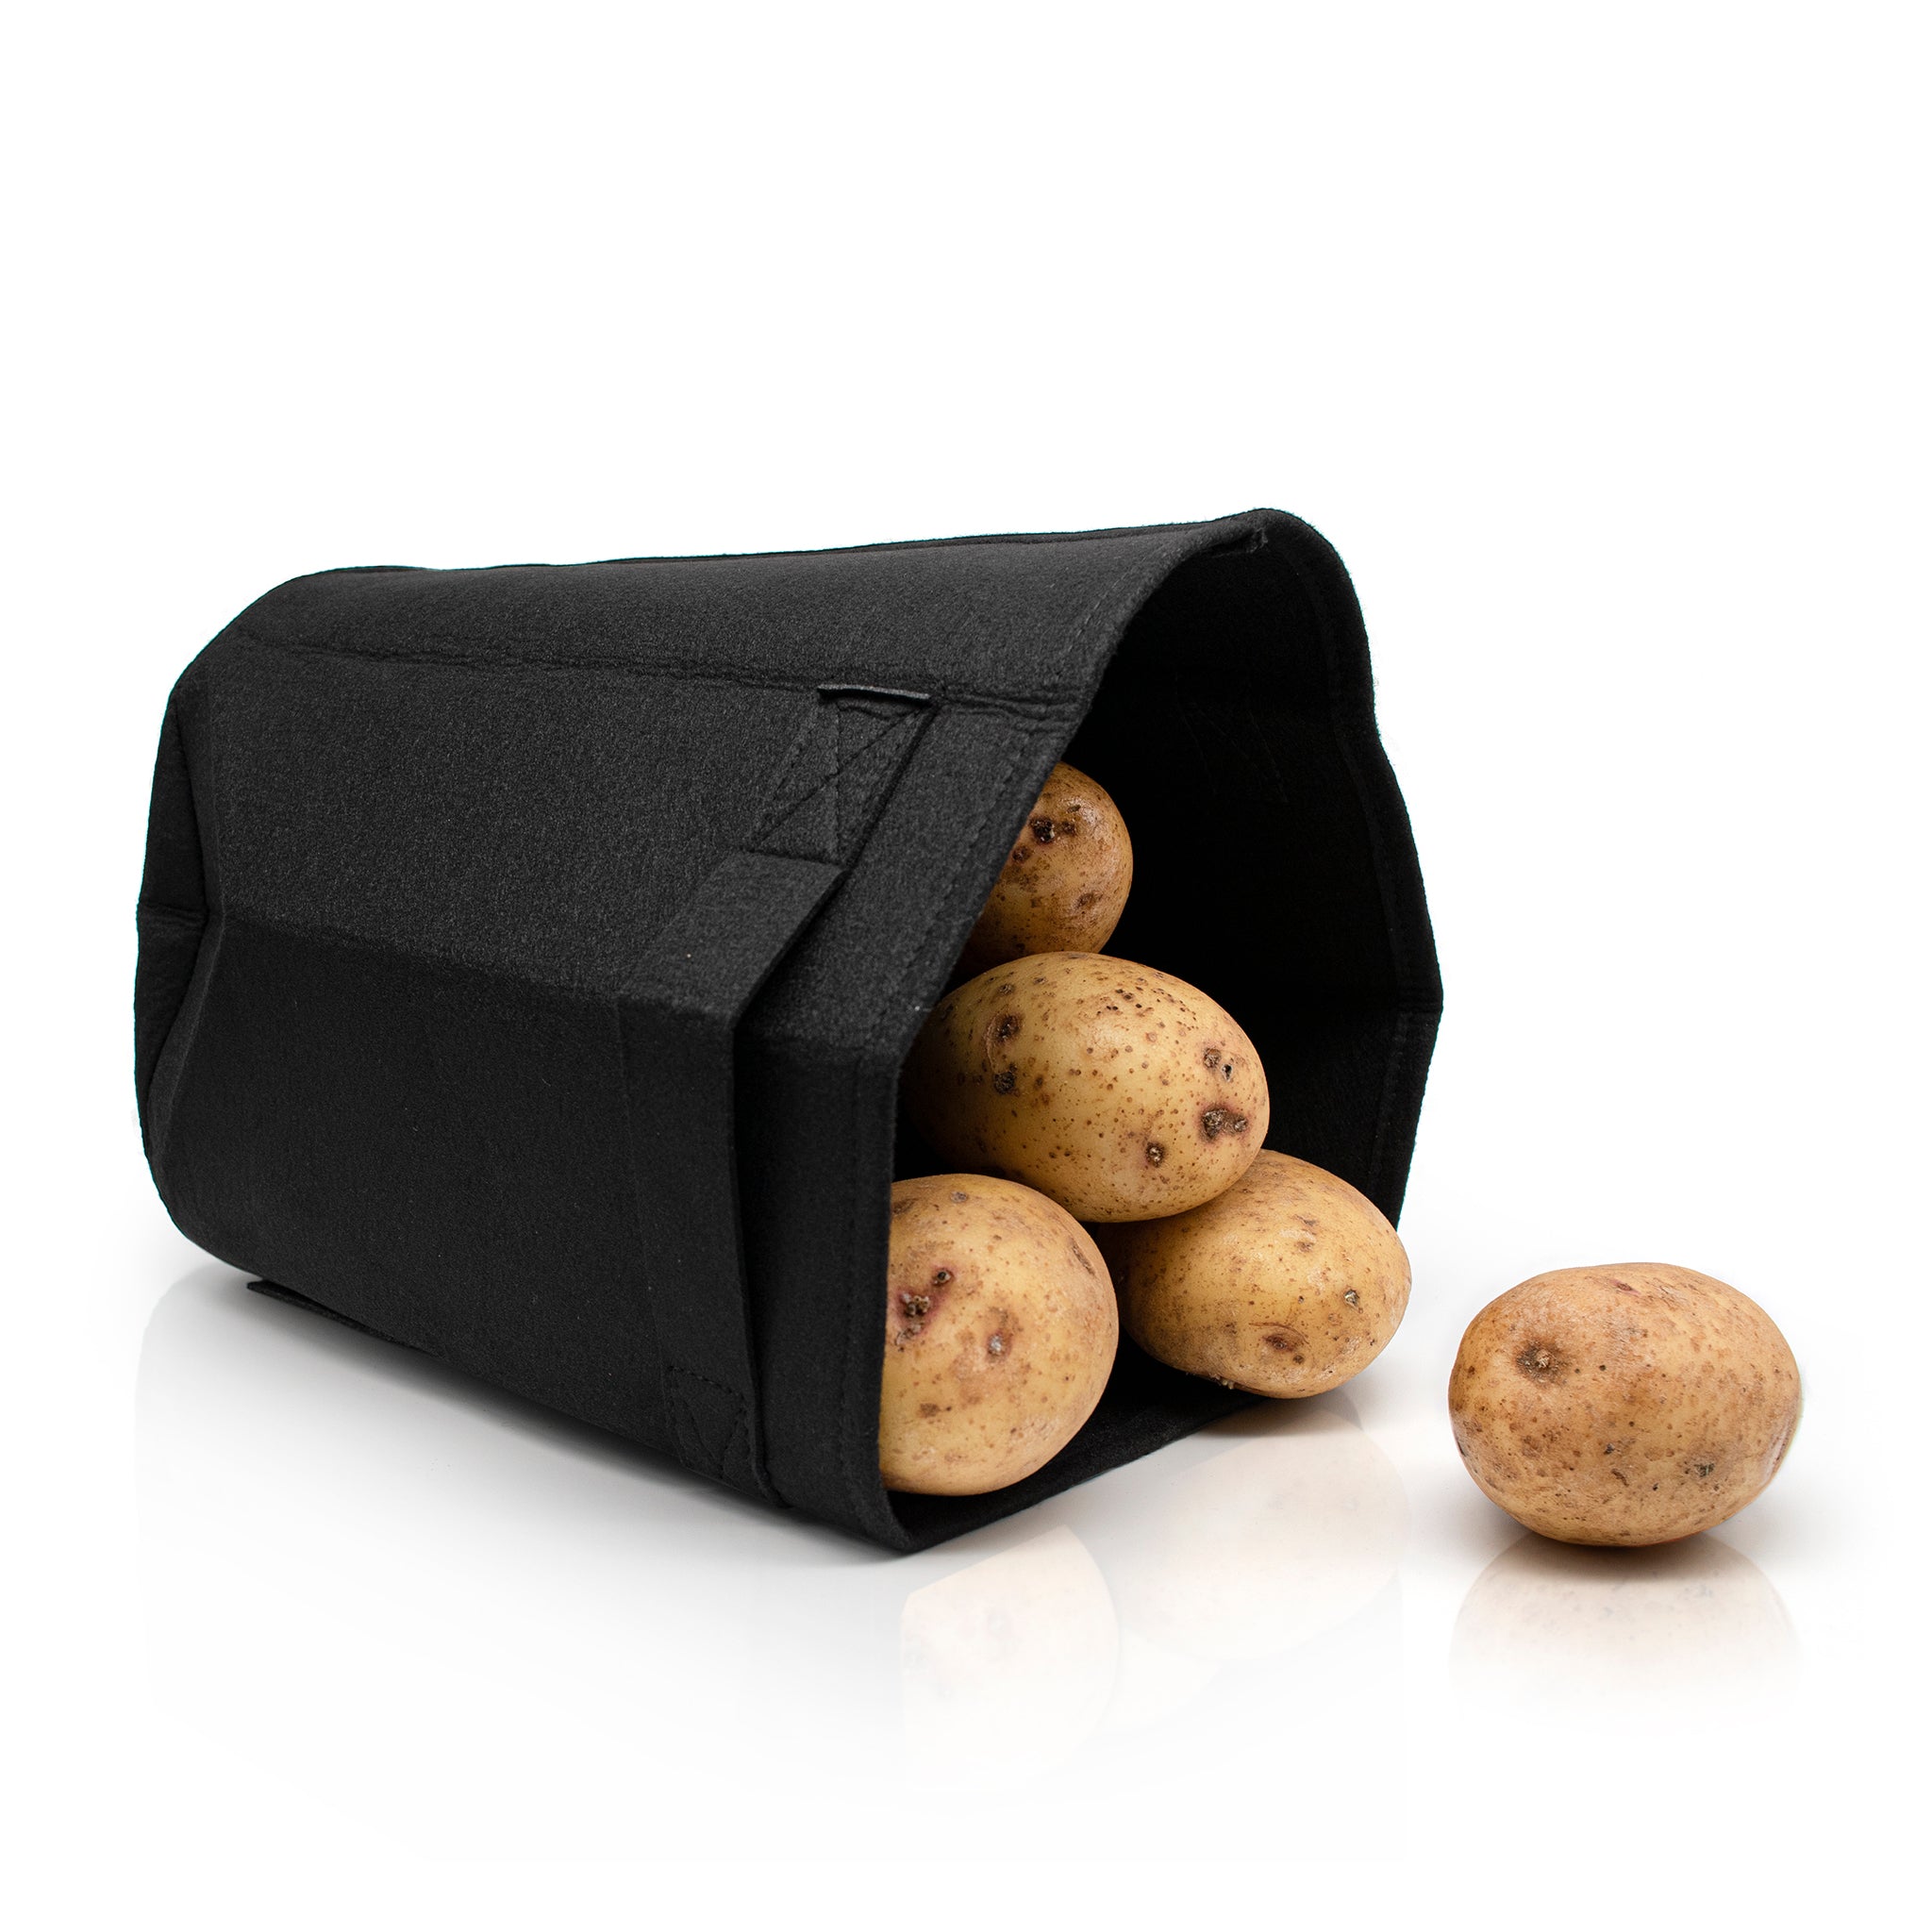 Eco-friendly potato sack for growing your own potatoes 